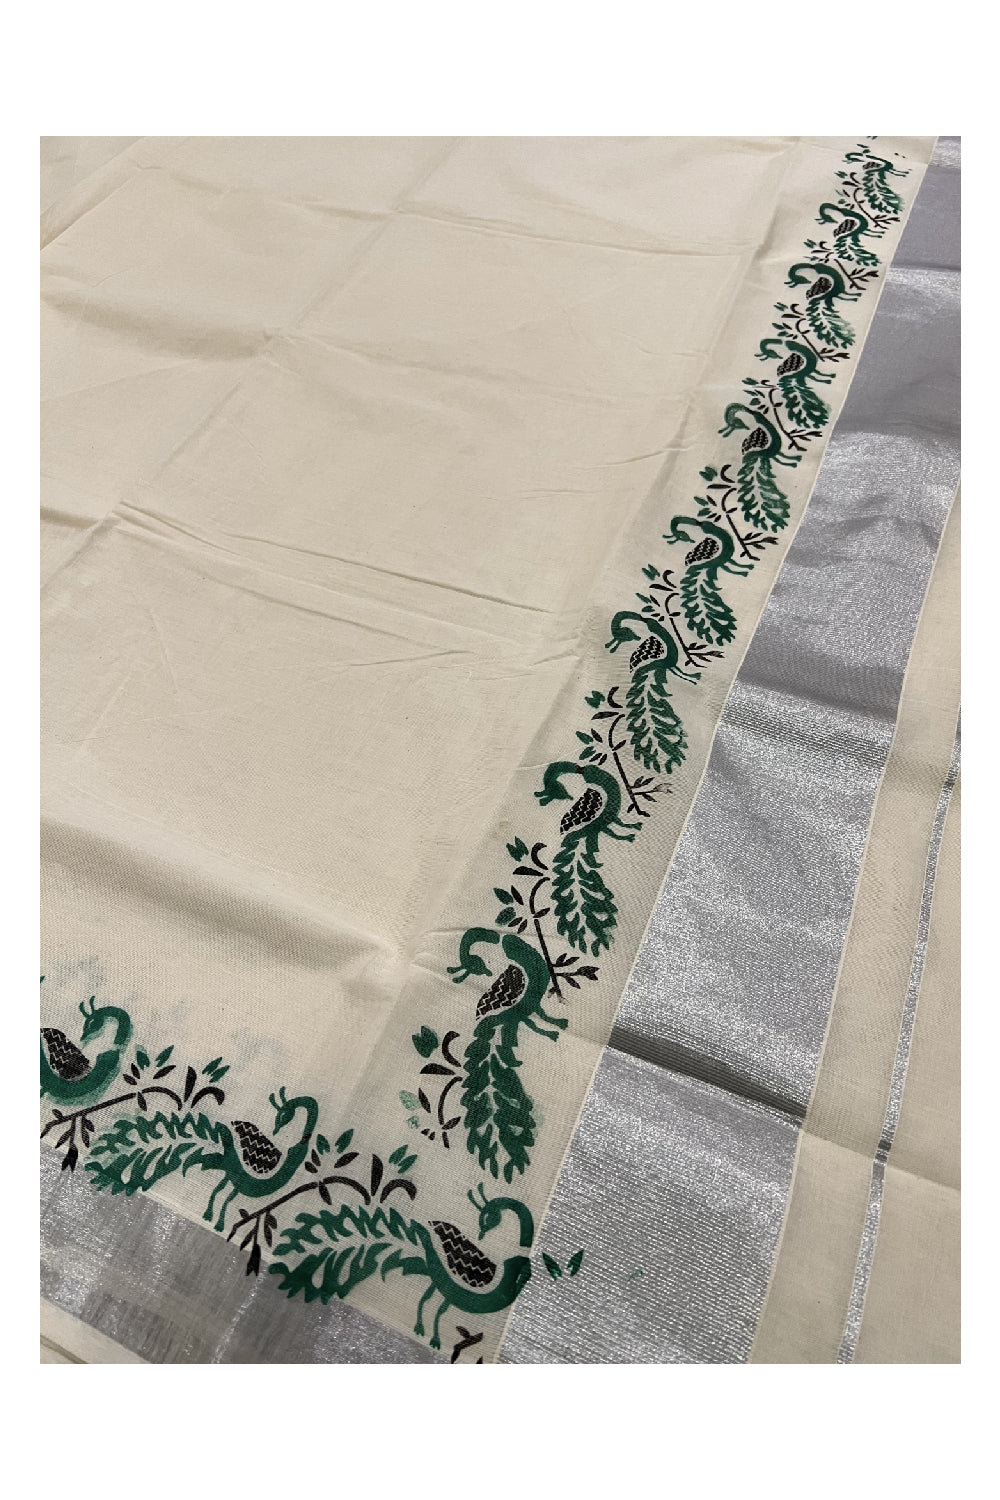 Pure Cotton Off White Kerala Silver Kasavu Saree with Peacock Green Block Printed Border